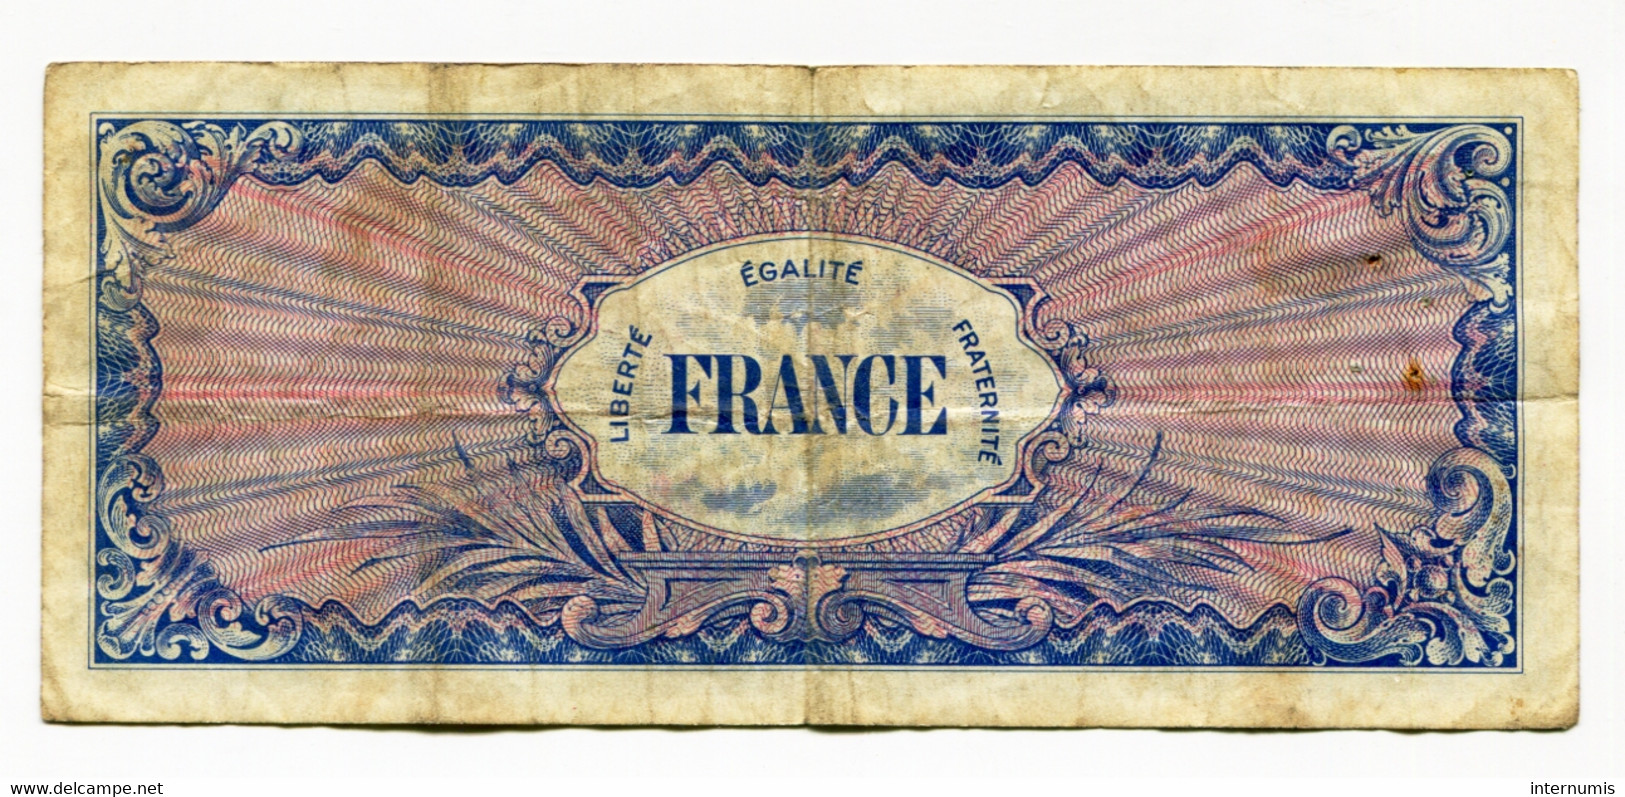 France, 50 FRANCS, FRANCE IMPRESSION AMERICAINE, TYPE DE 1945, N° : 27040770, TB (F), VF.24.01 - 1945 Verso France